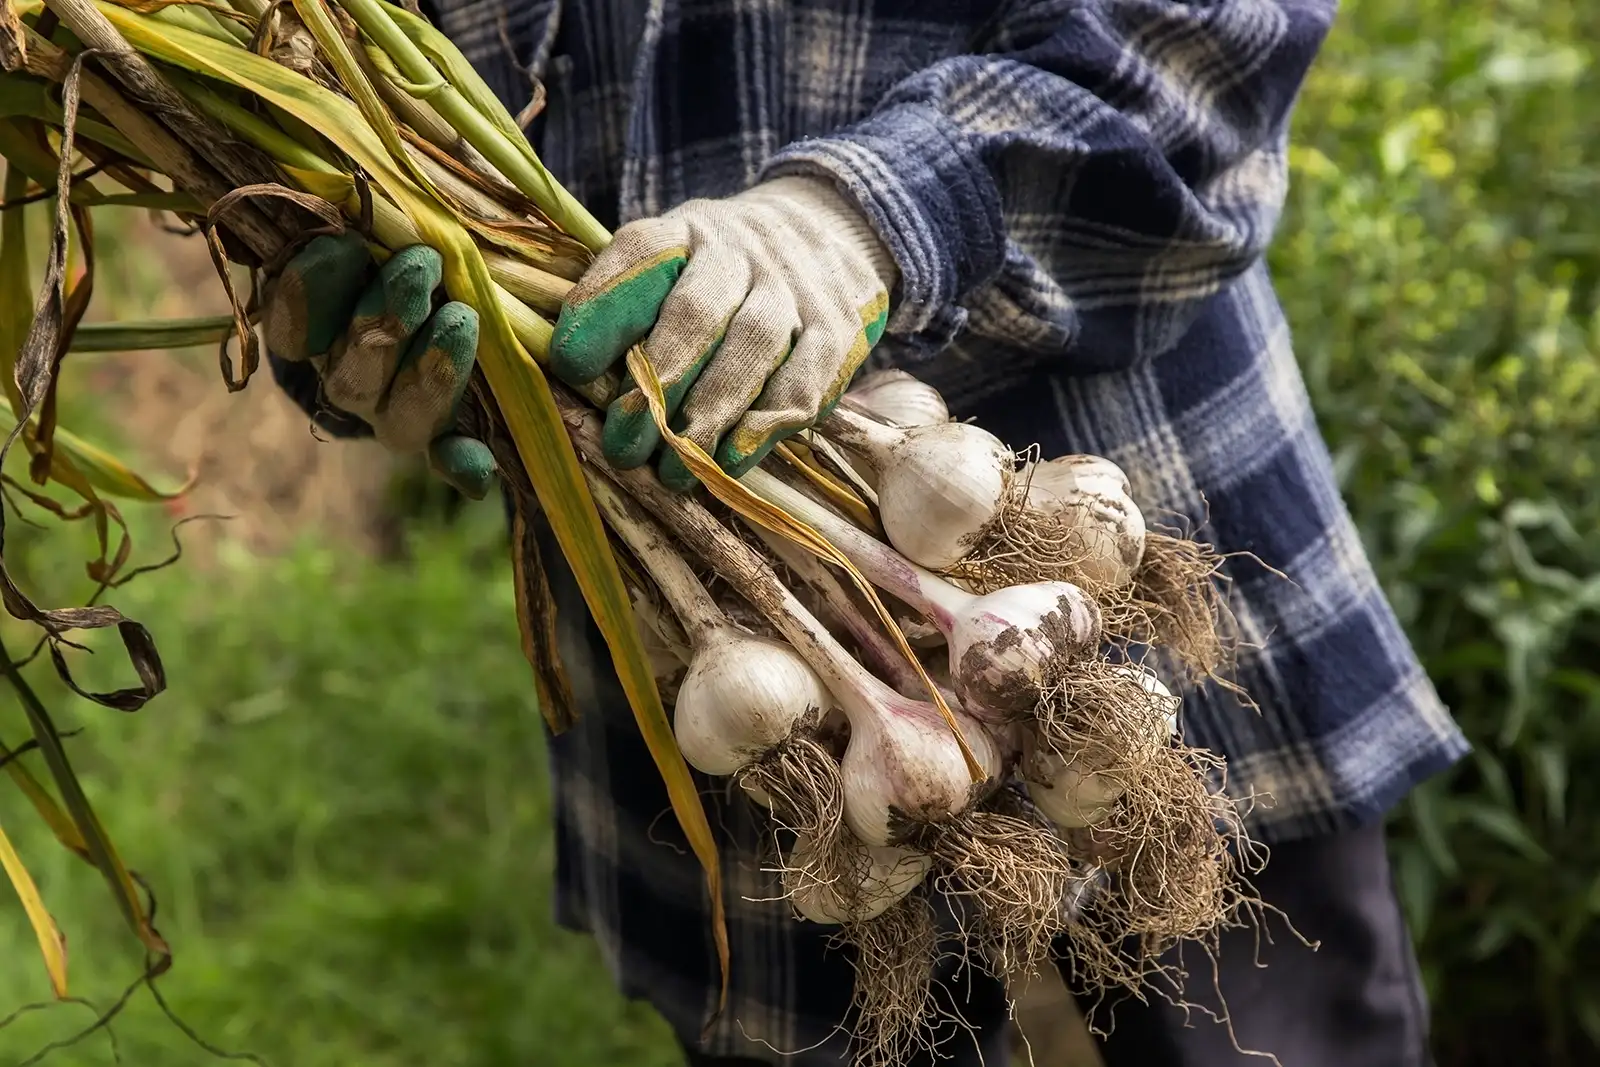 Bunch of fresh raw organic garlic harvest in farmer hands in garden